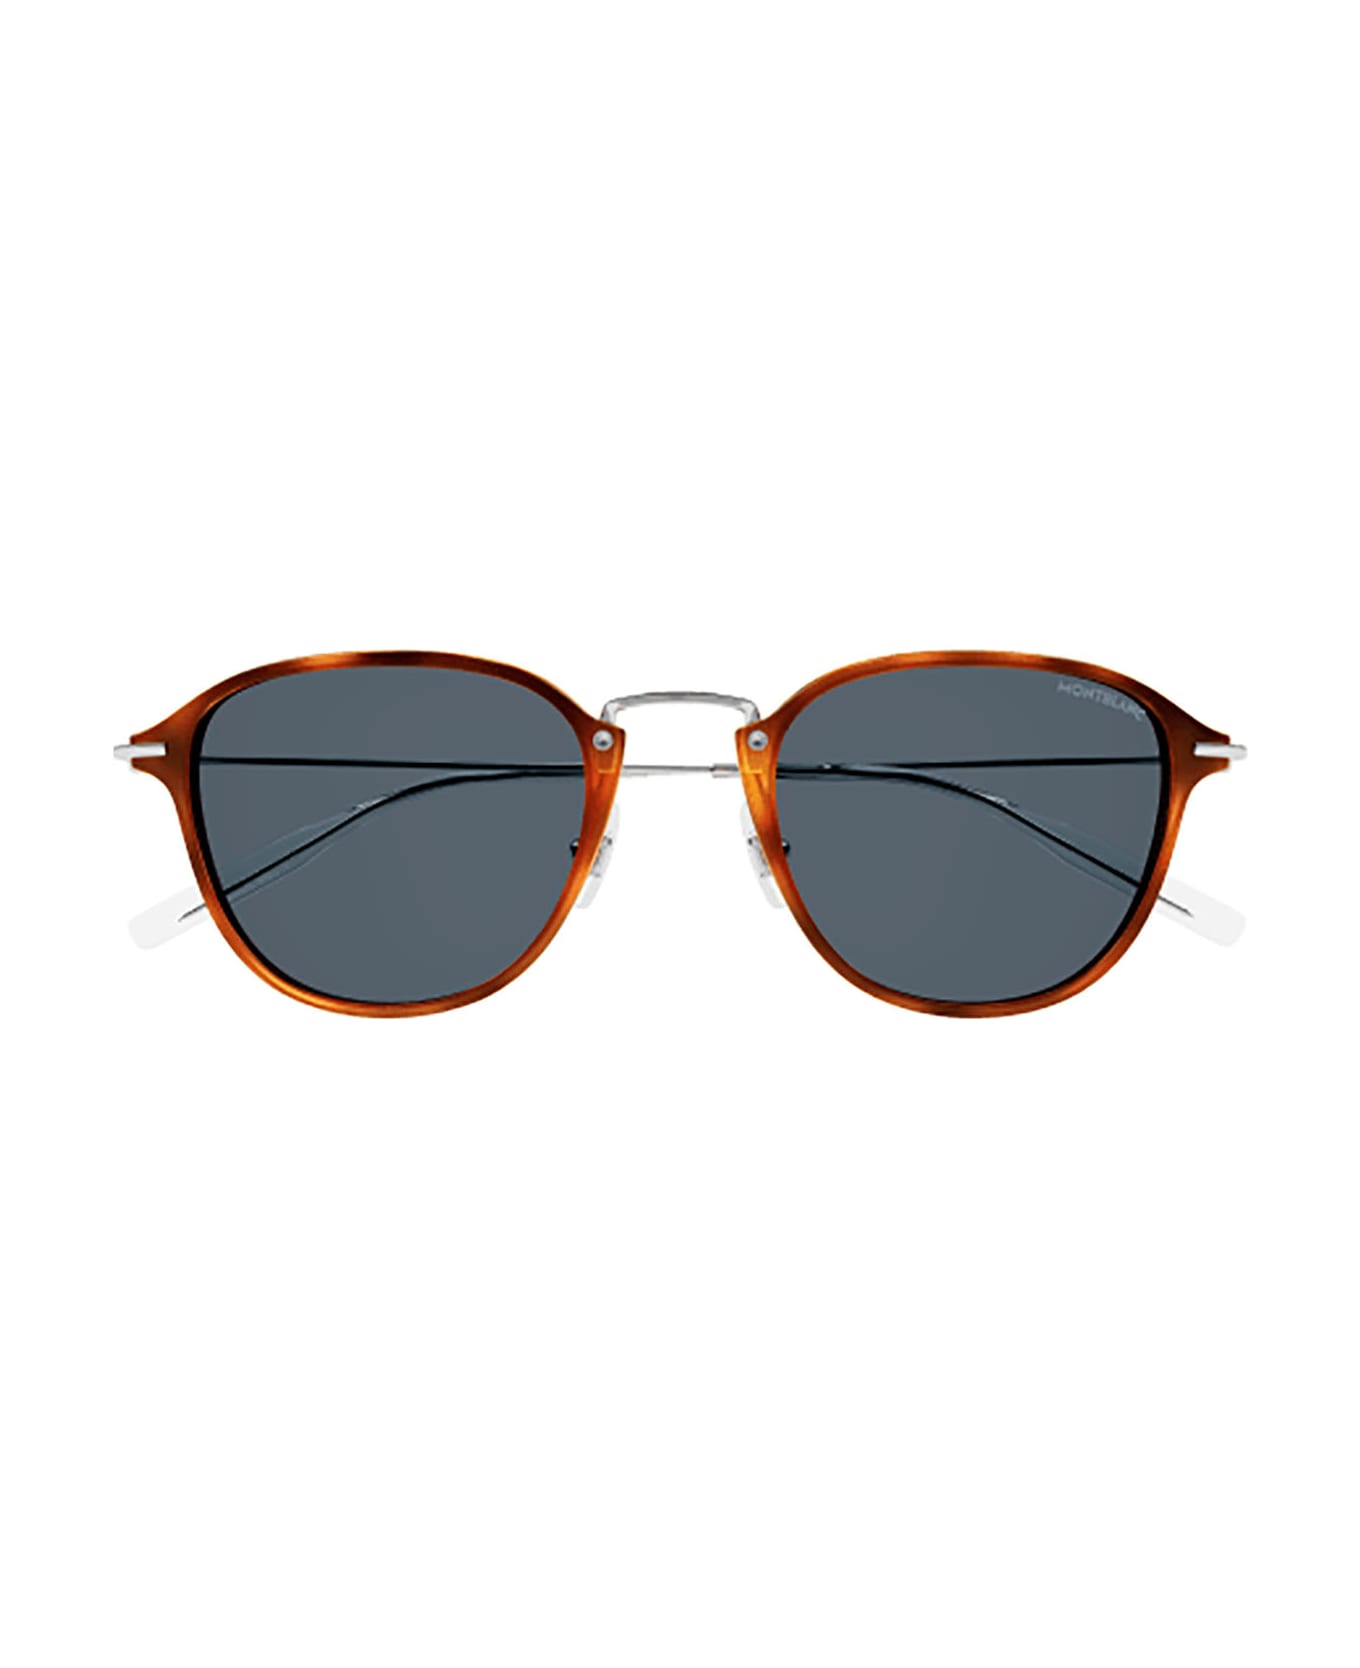 Montblanc MB0155S Sunglasses - Havana Silver Grey サングラス